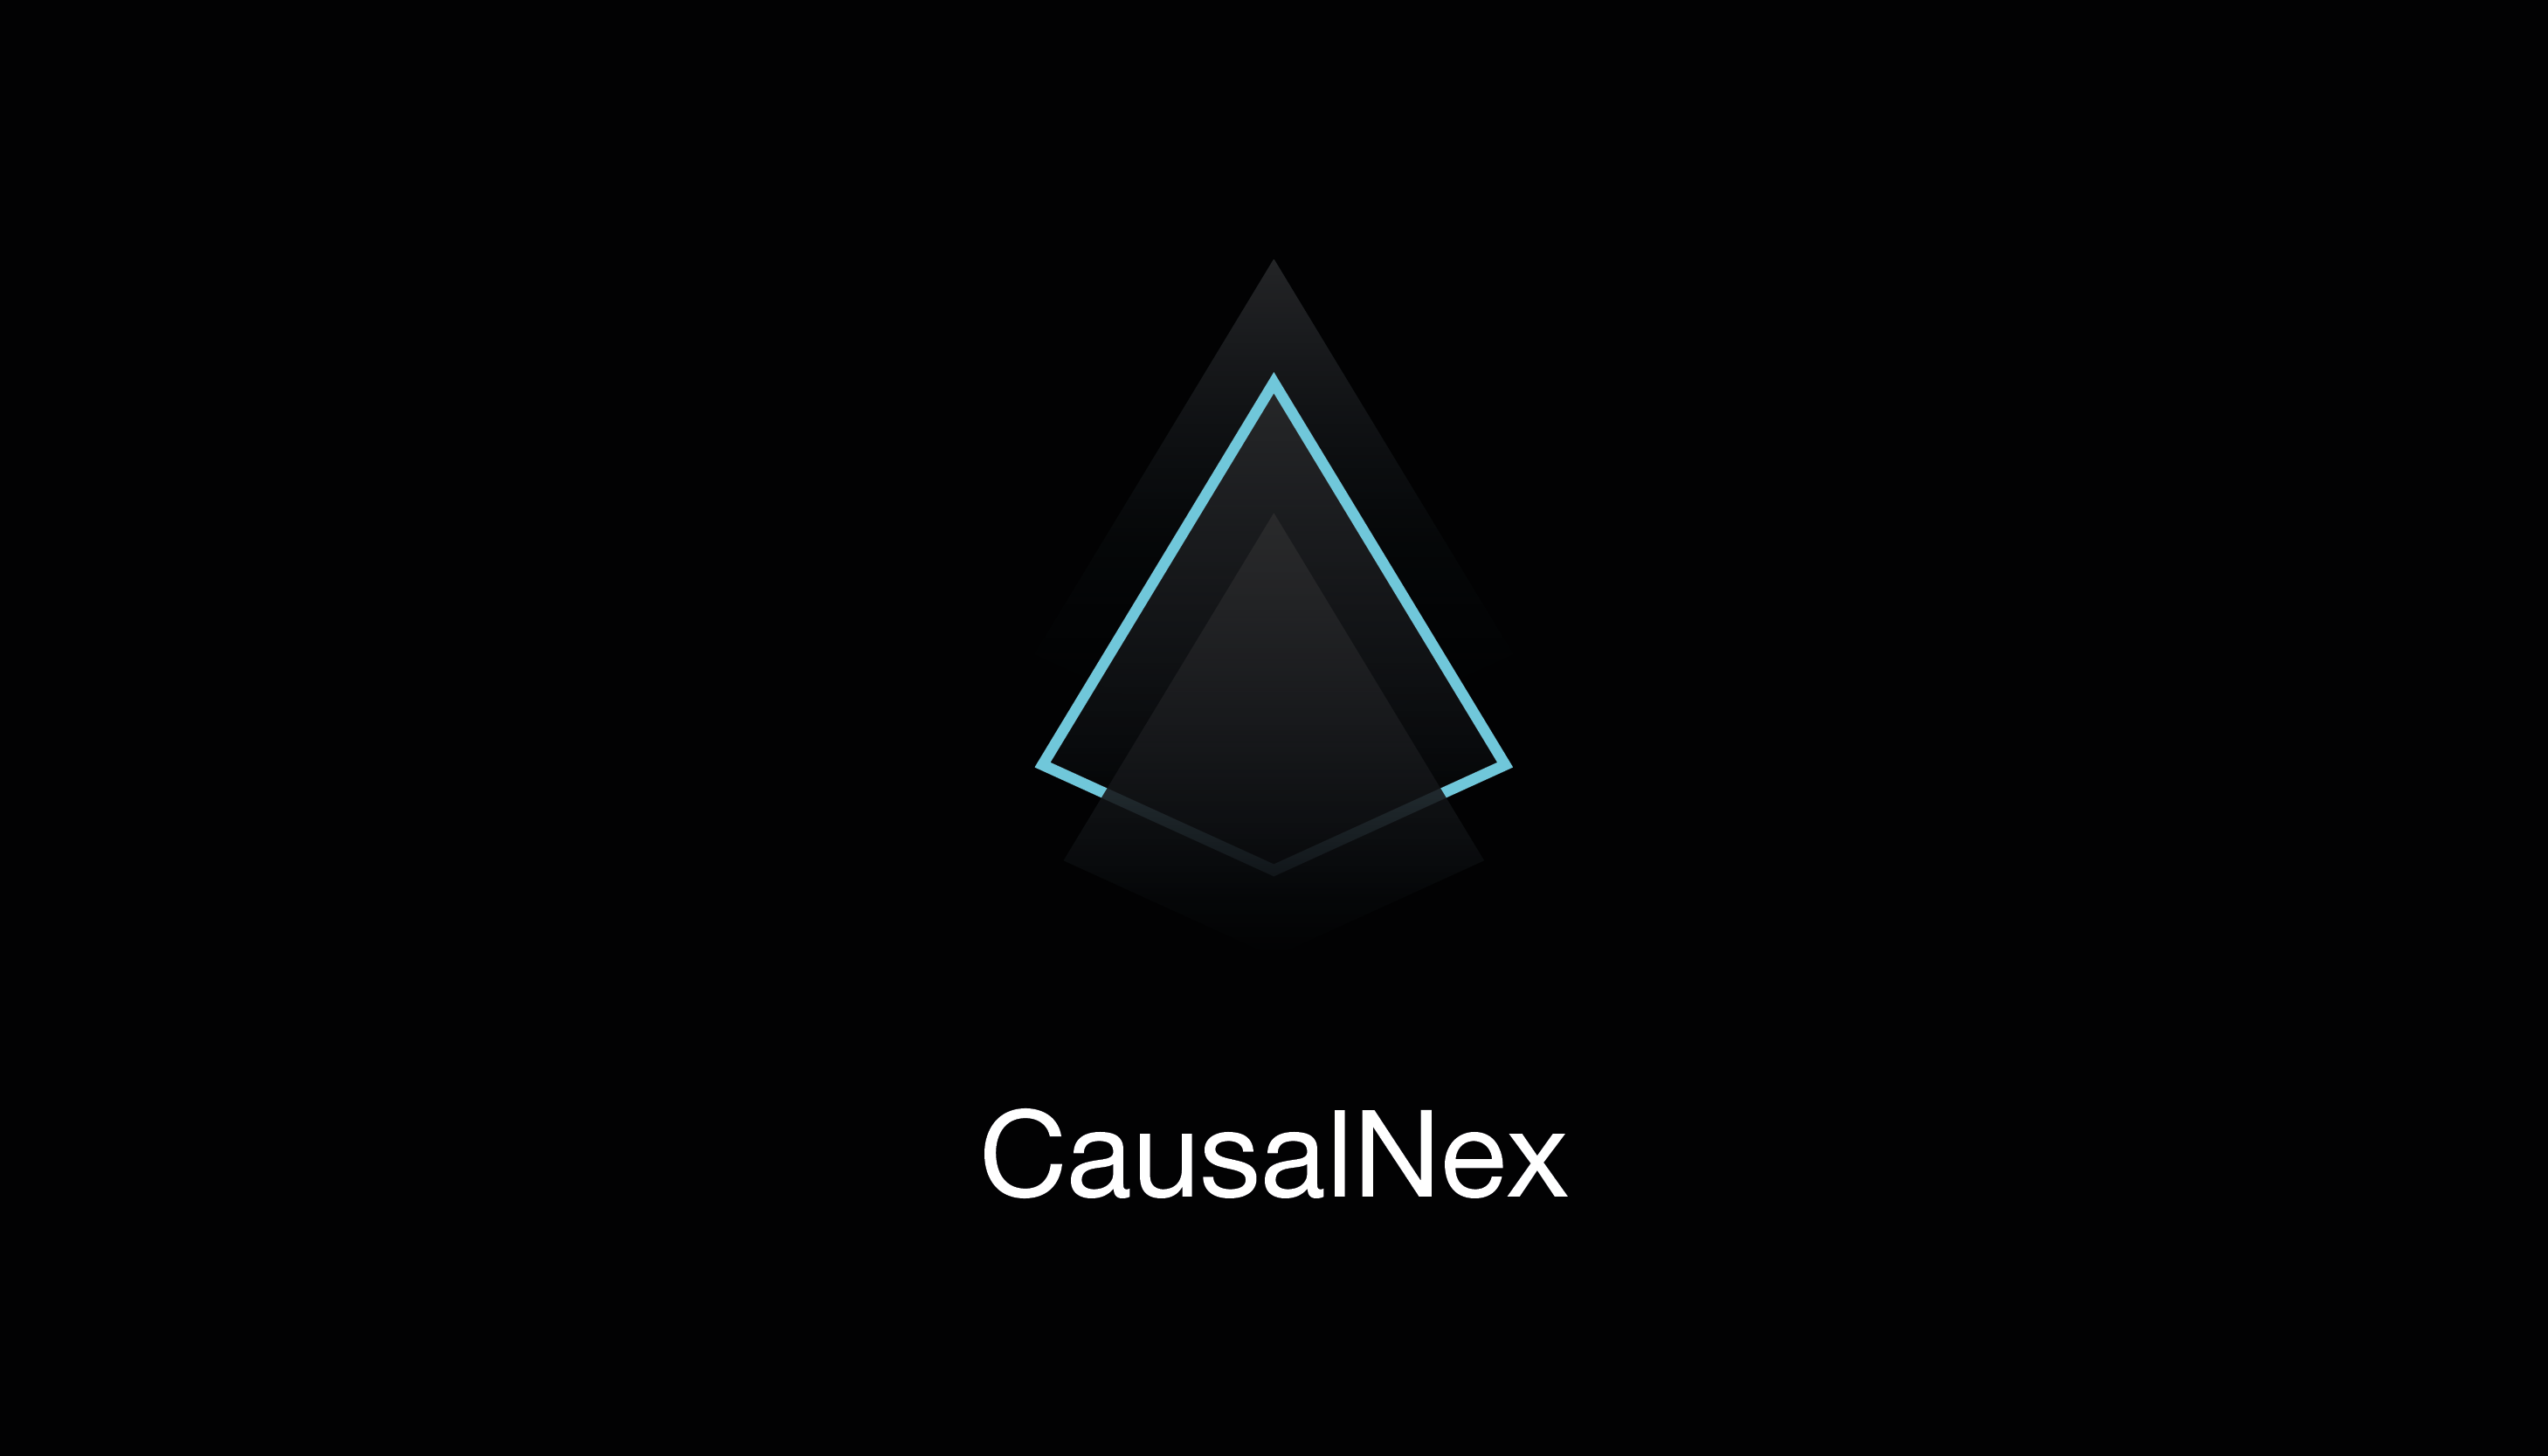 CausalNex logo